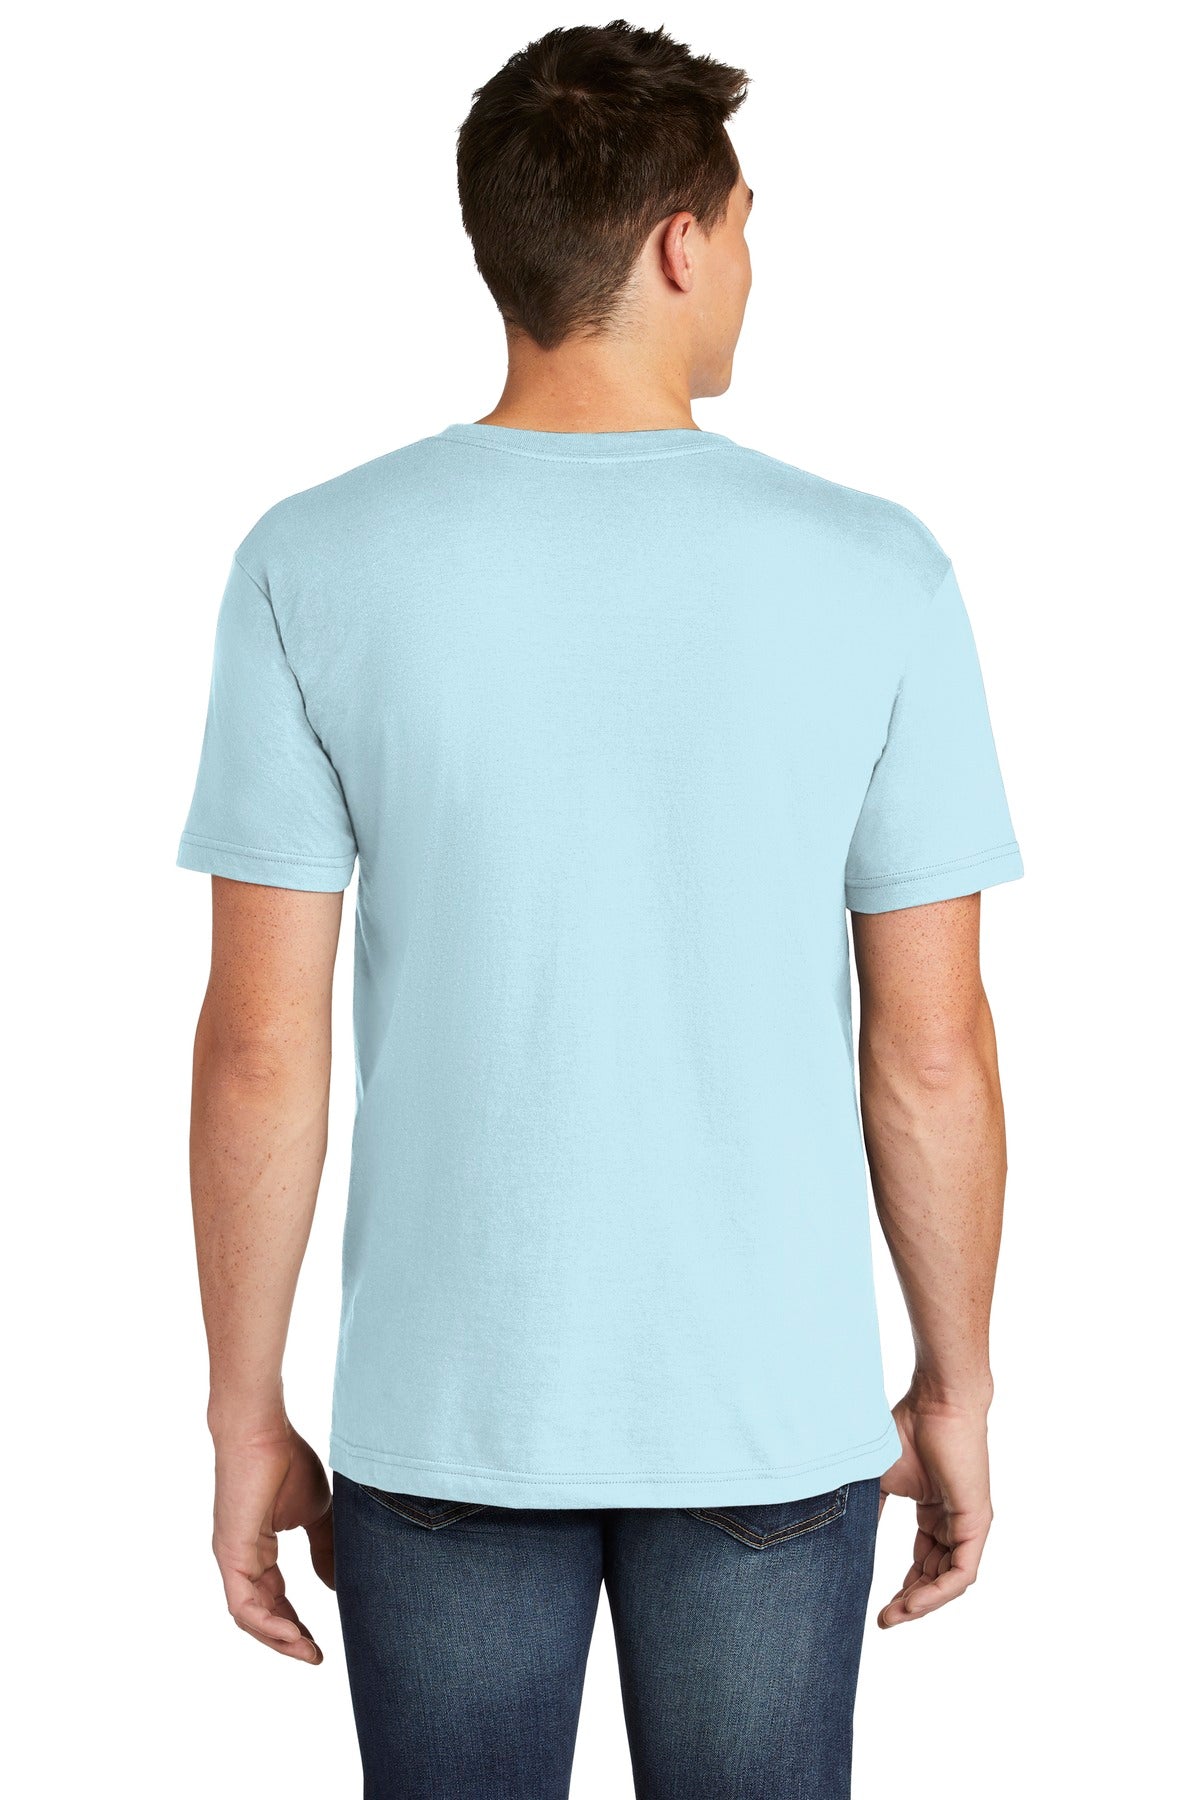 American Apparel Fine Jersey V-Neck T-Shirt. 2456W